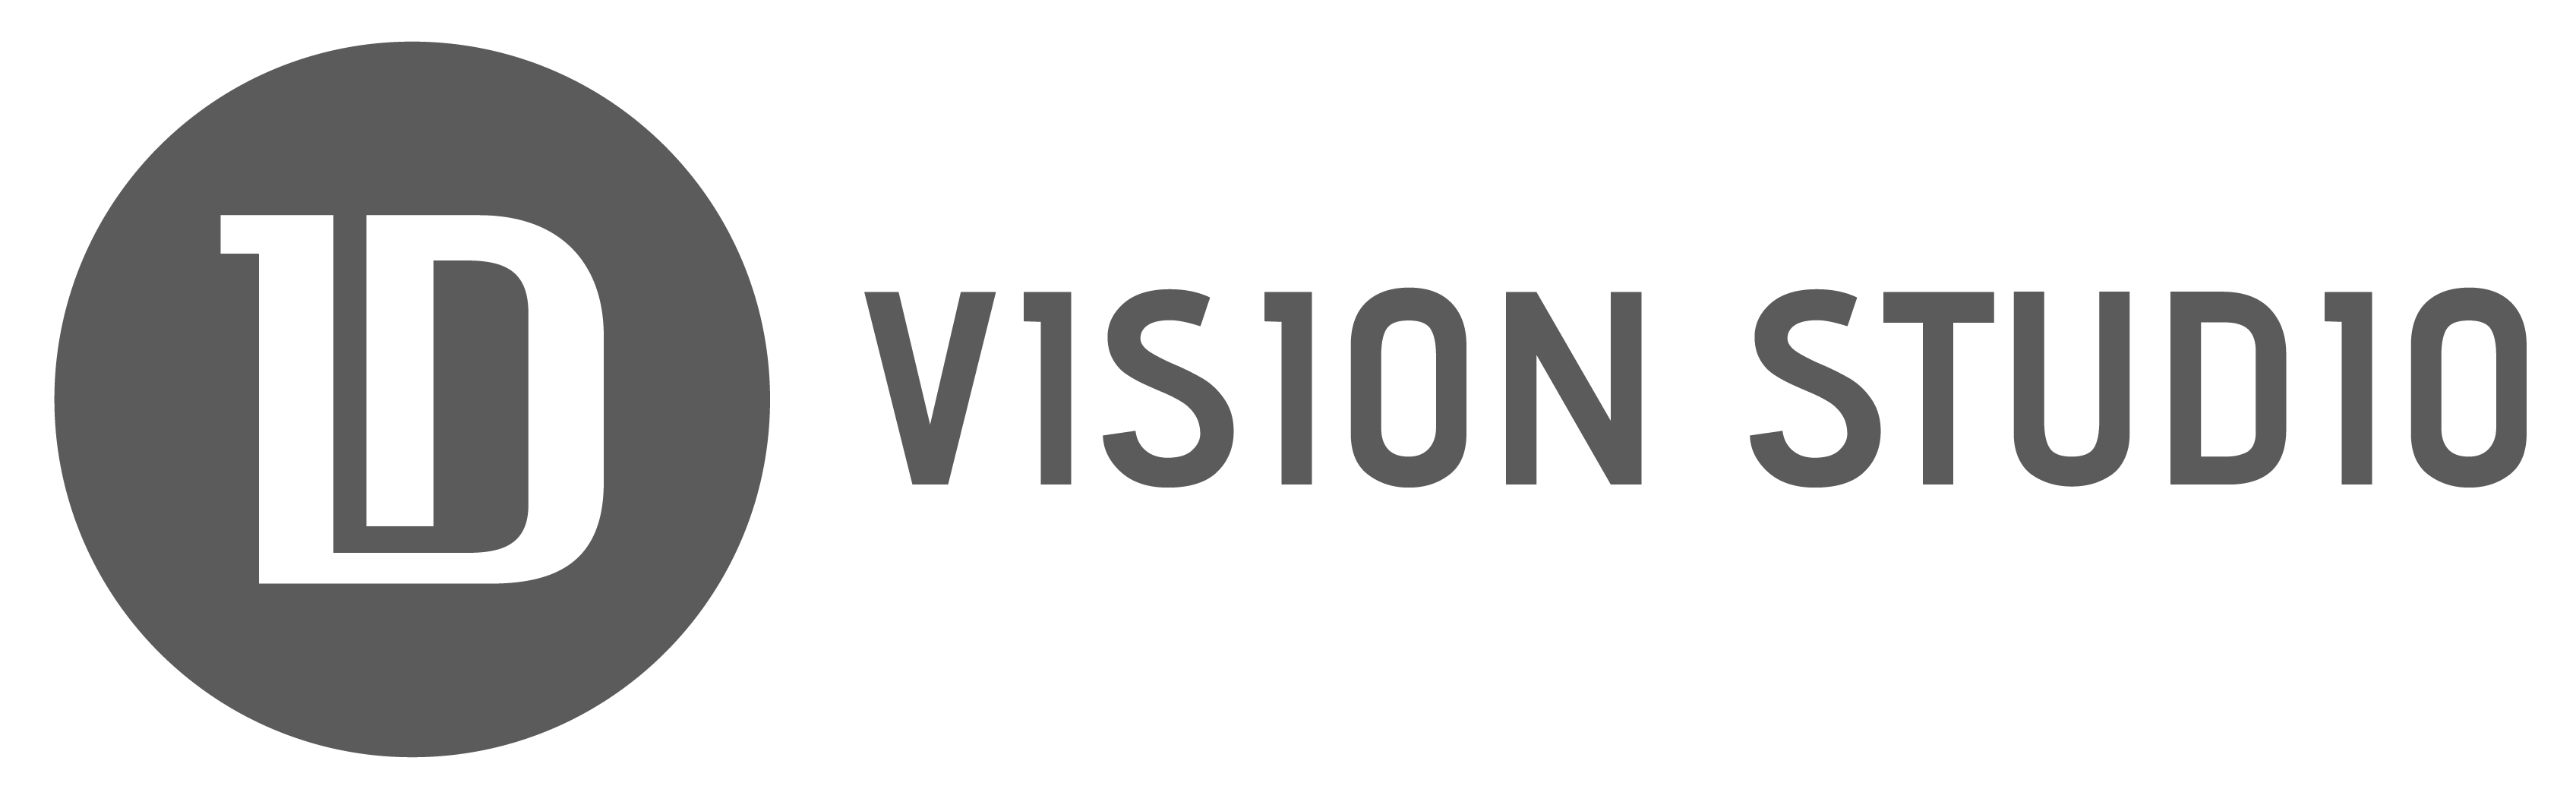 ID Vision Studio